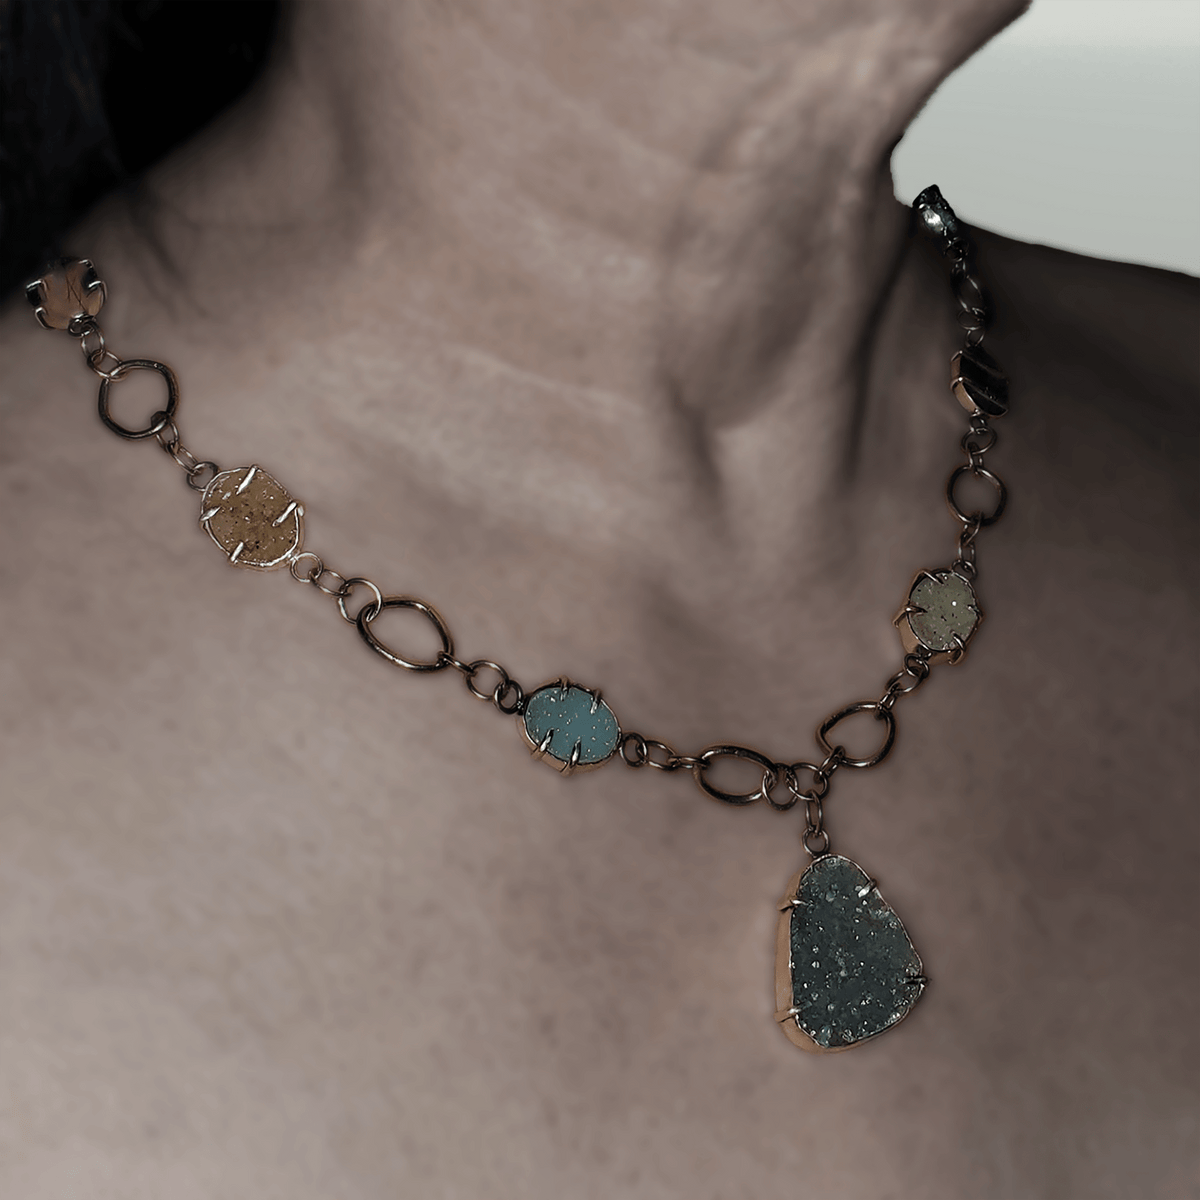 janet lasher Jewelry Necklace Sextet of Amethyst/Citrine/Rose Quartz Druzy Necklace with Freeform Pendant